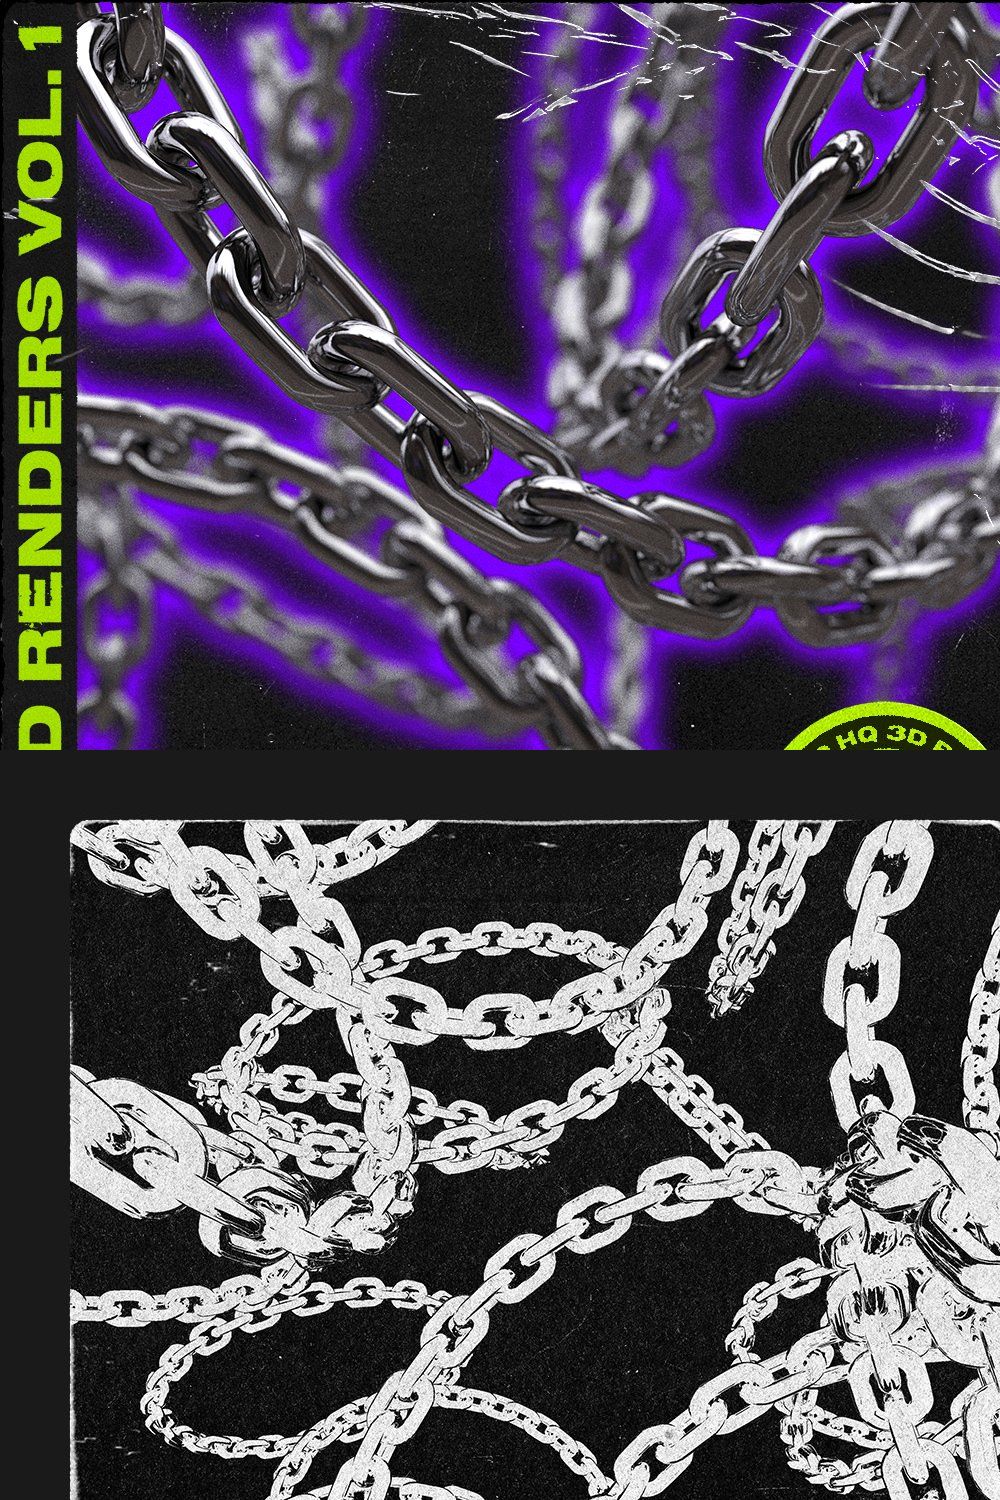 Dread Renders Vol. 1 - Chains pinterest preview image.